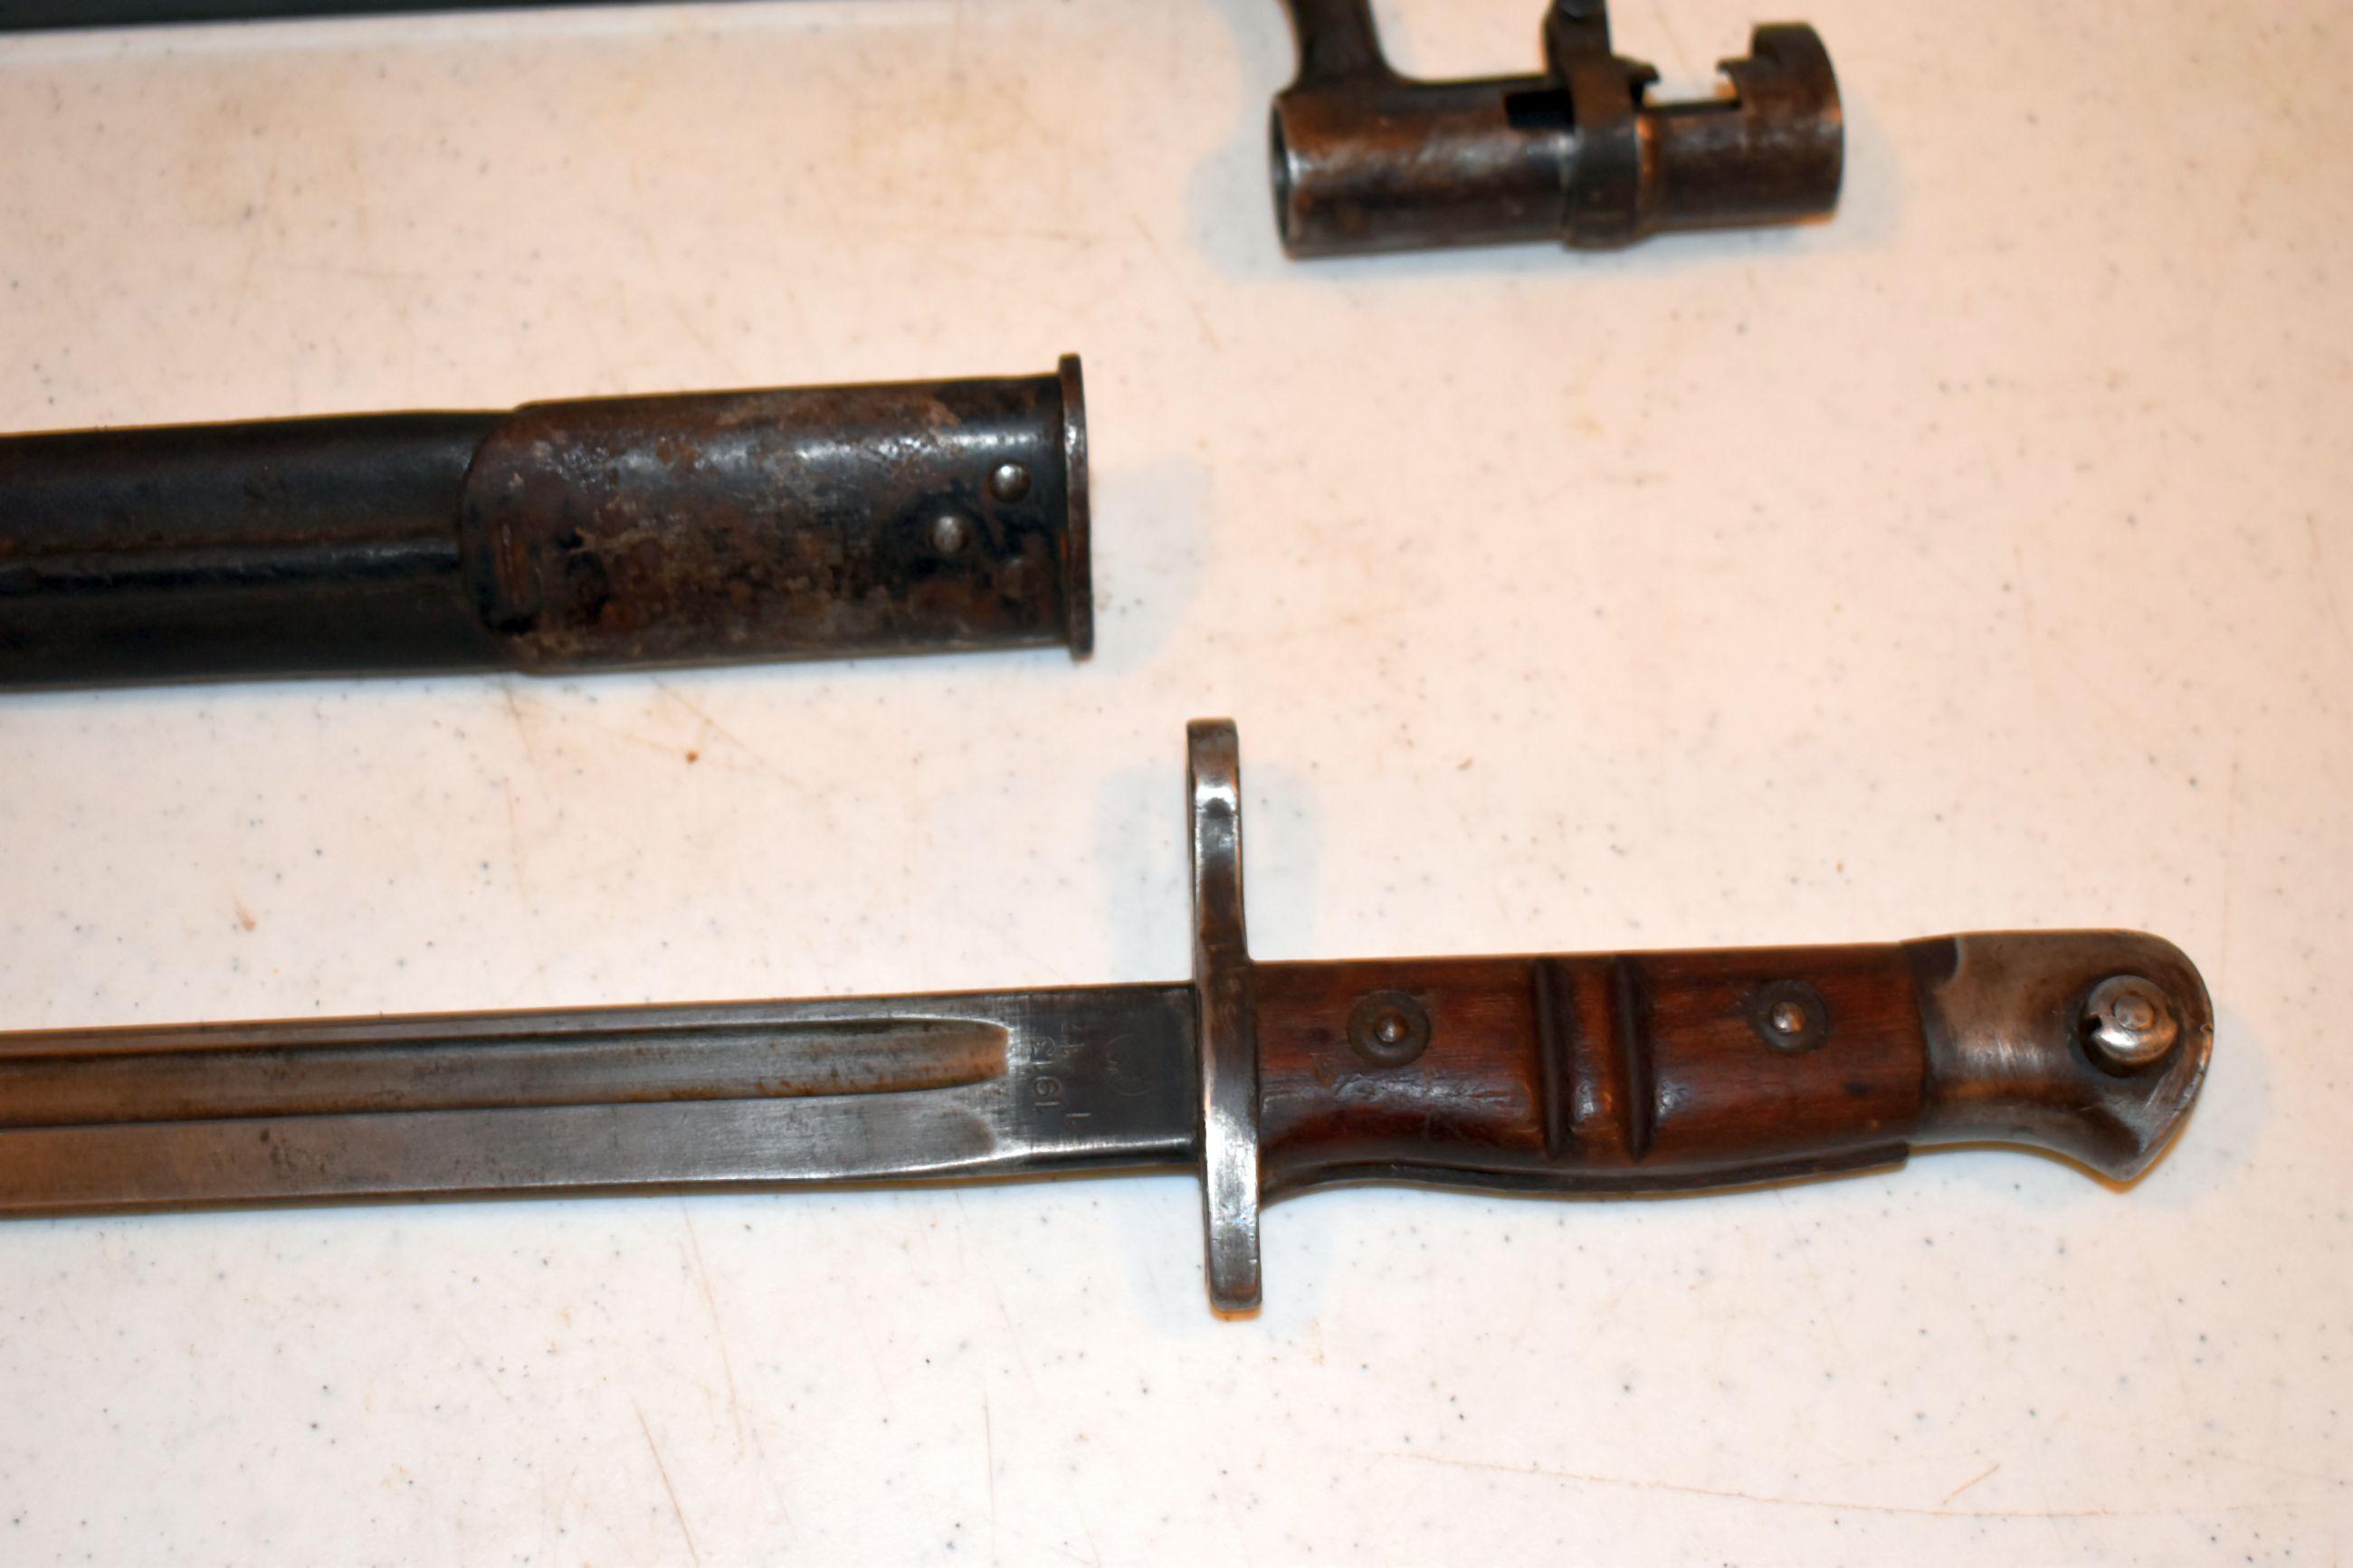 Early US Marked Bayonet With Belt Loop Holder, And World War 1 Era Bayonet Marked 1913 With Sheath